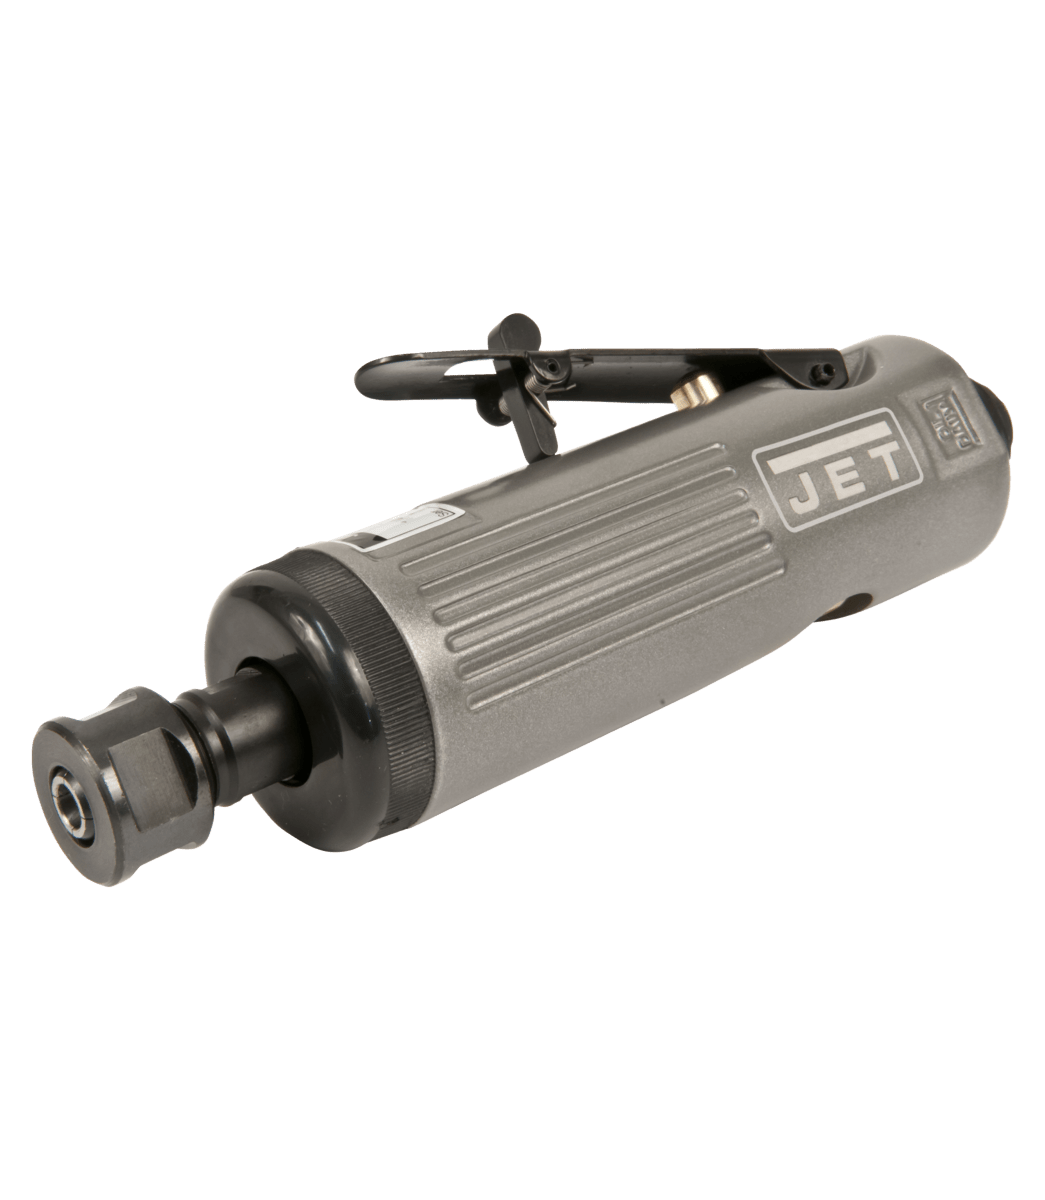 JAT-401, 1/4" Die Grinder - Jet